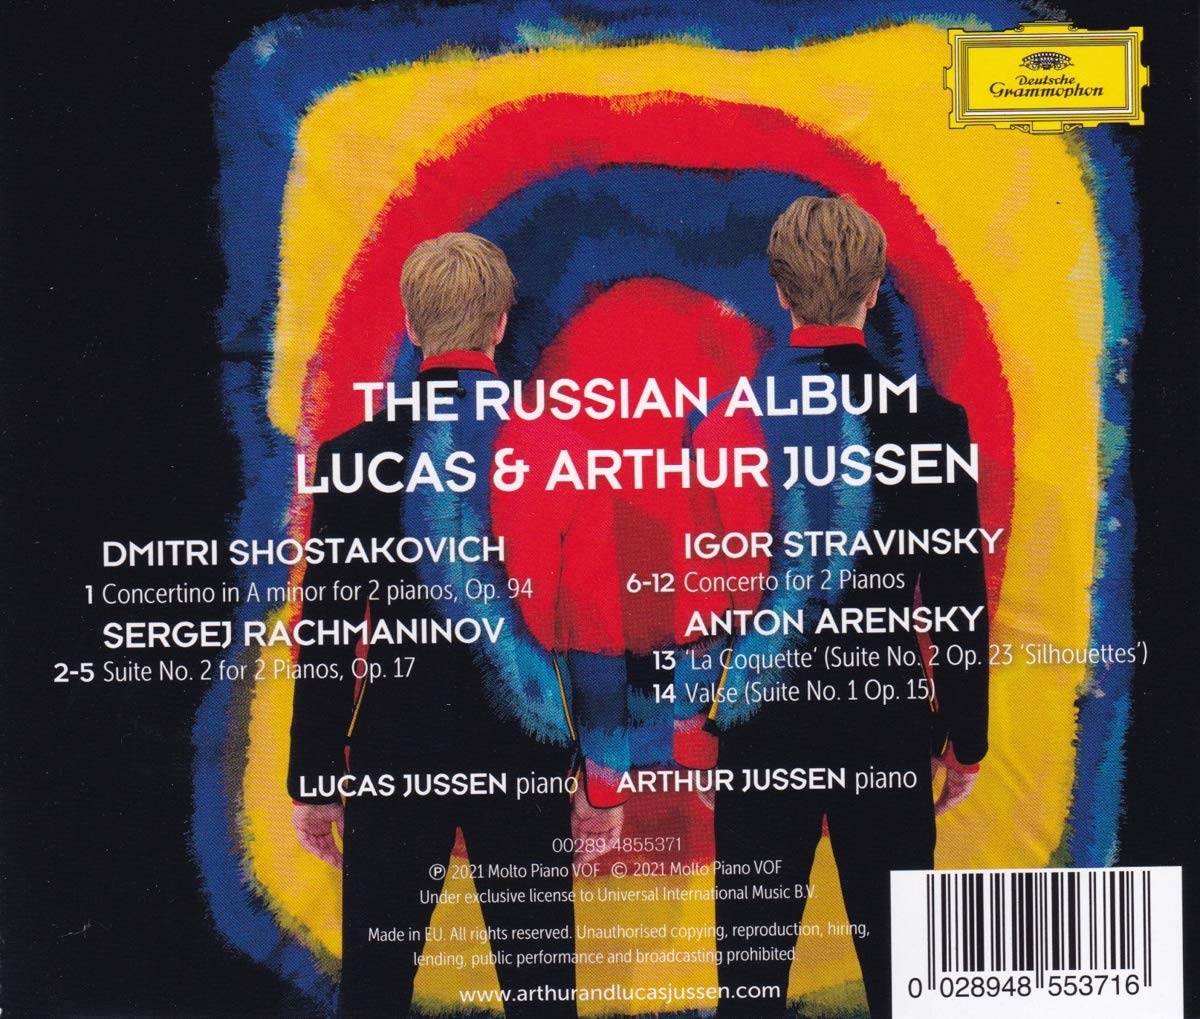 Lucas Jussen / Arthur Jussen 쇼스타코비치 / 라흐마니노프 / 스트라빈스키 / 아렌스키: 러시아 앨범 (Shostakovich / Rachmaninov / Stravinsky / Arensky: The Russian Album) 